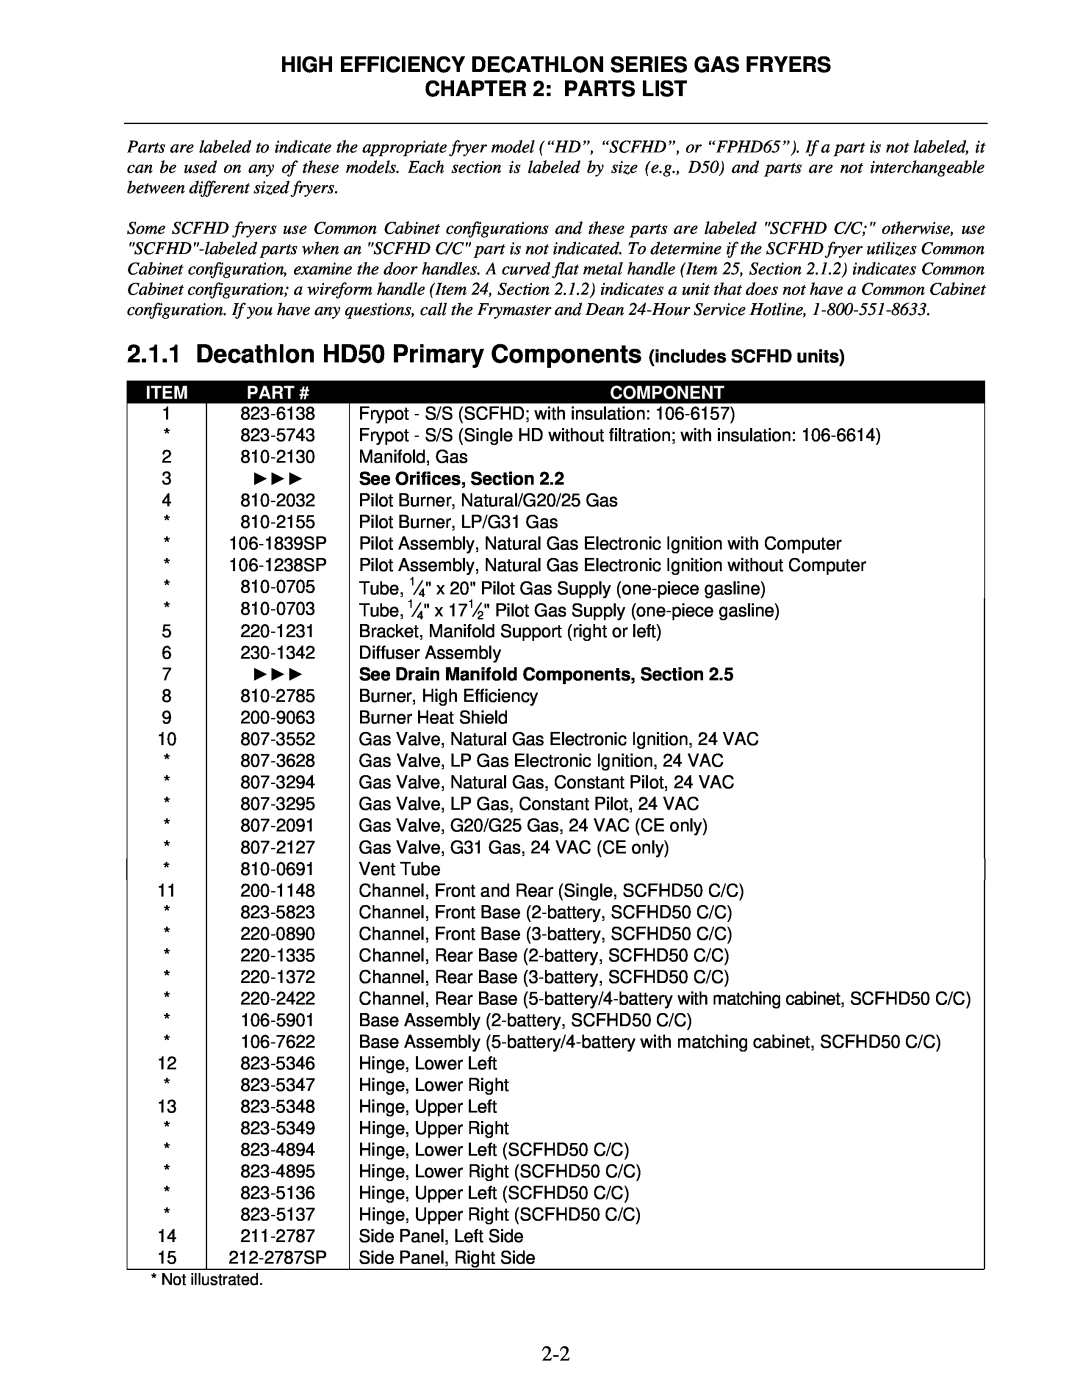 Frymaster FPHD manual Parts List, High Efficiency Decathlon Series Gas Fryers, Item, Part #, 823-6138, Component 